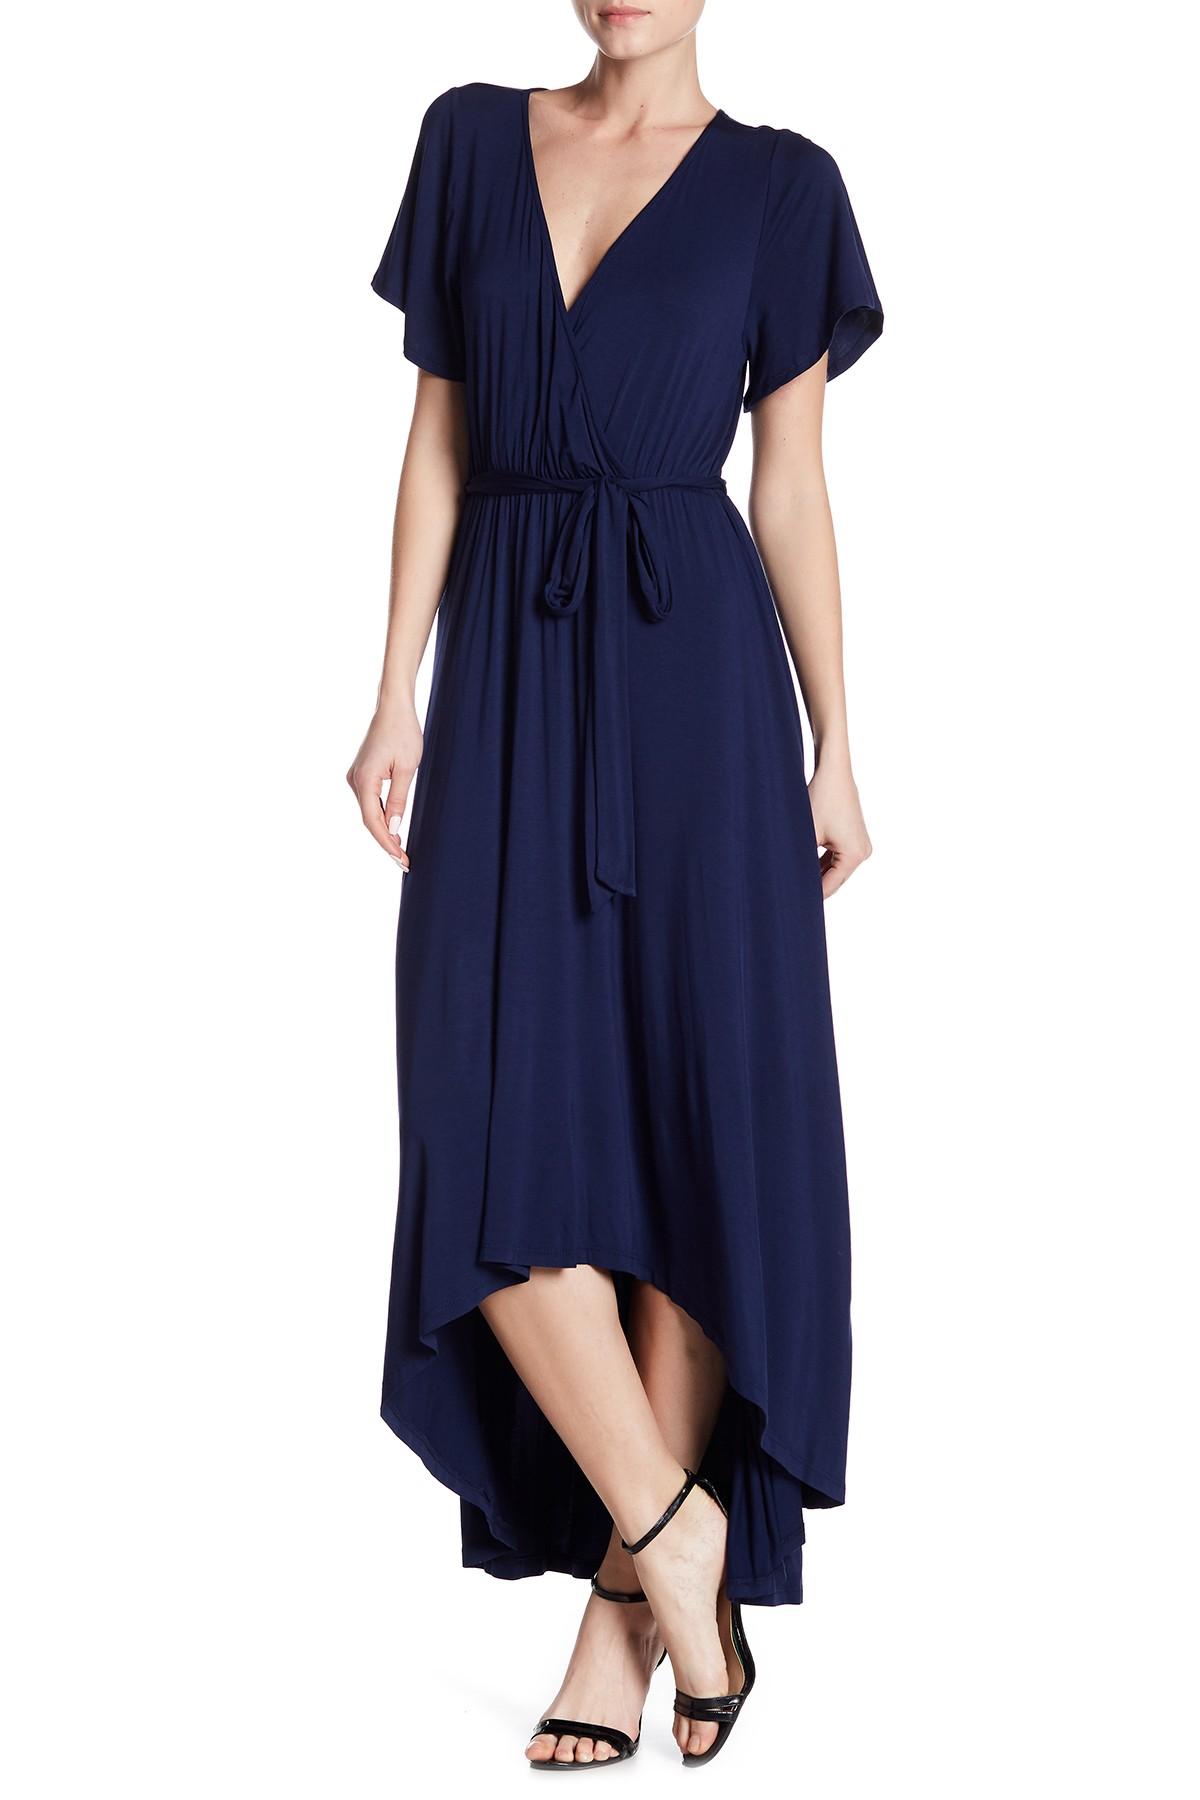 West Kei Synthetic High/low Knit Wrap Dress in Blue - Lyst